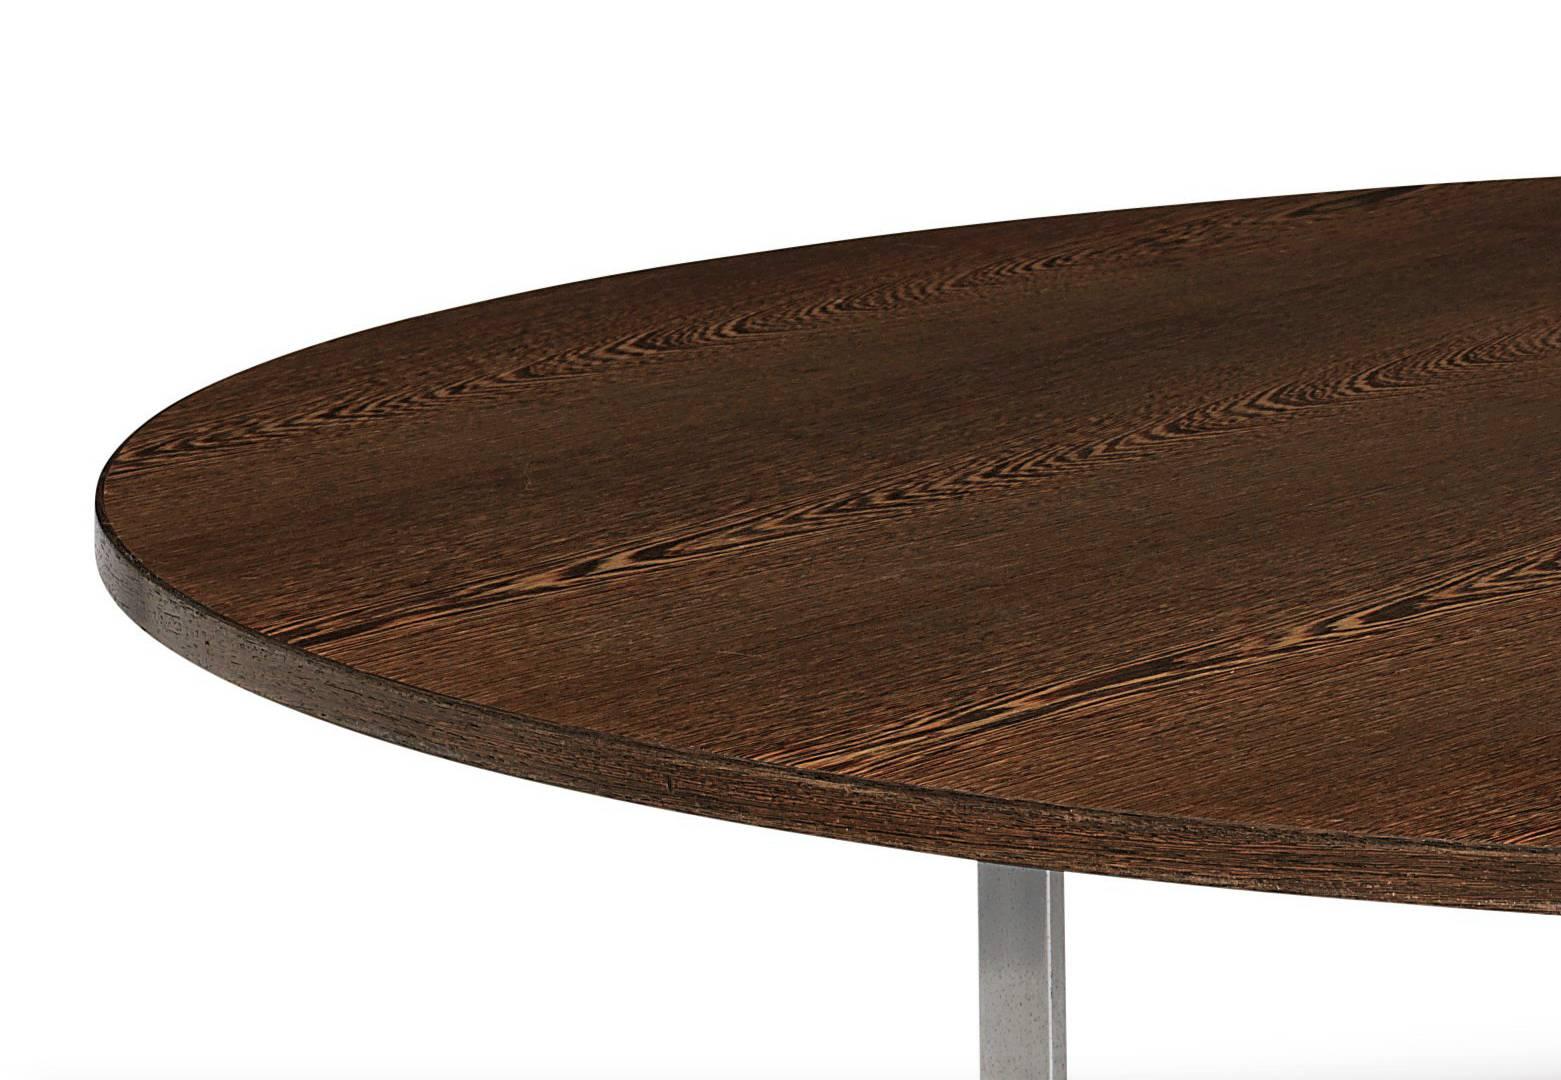 Scandinavian Modern Hans Wegner's Monumental Circular Dining Table, the 